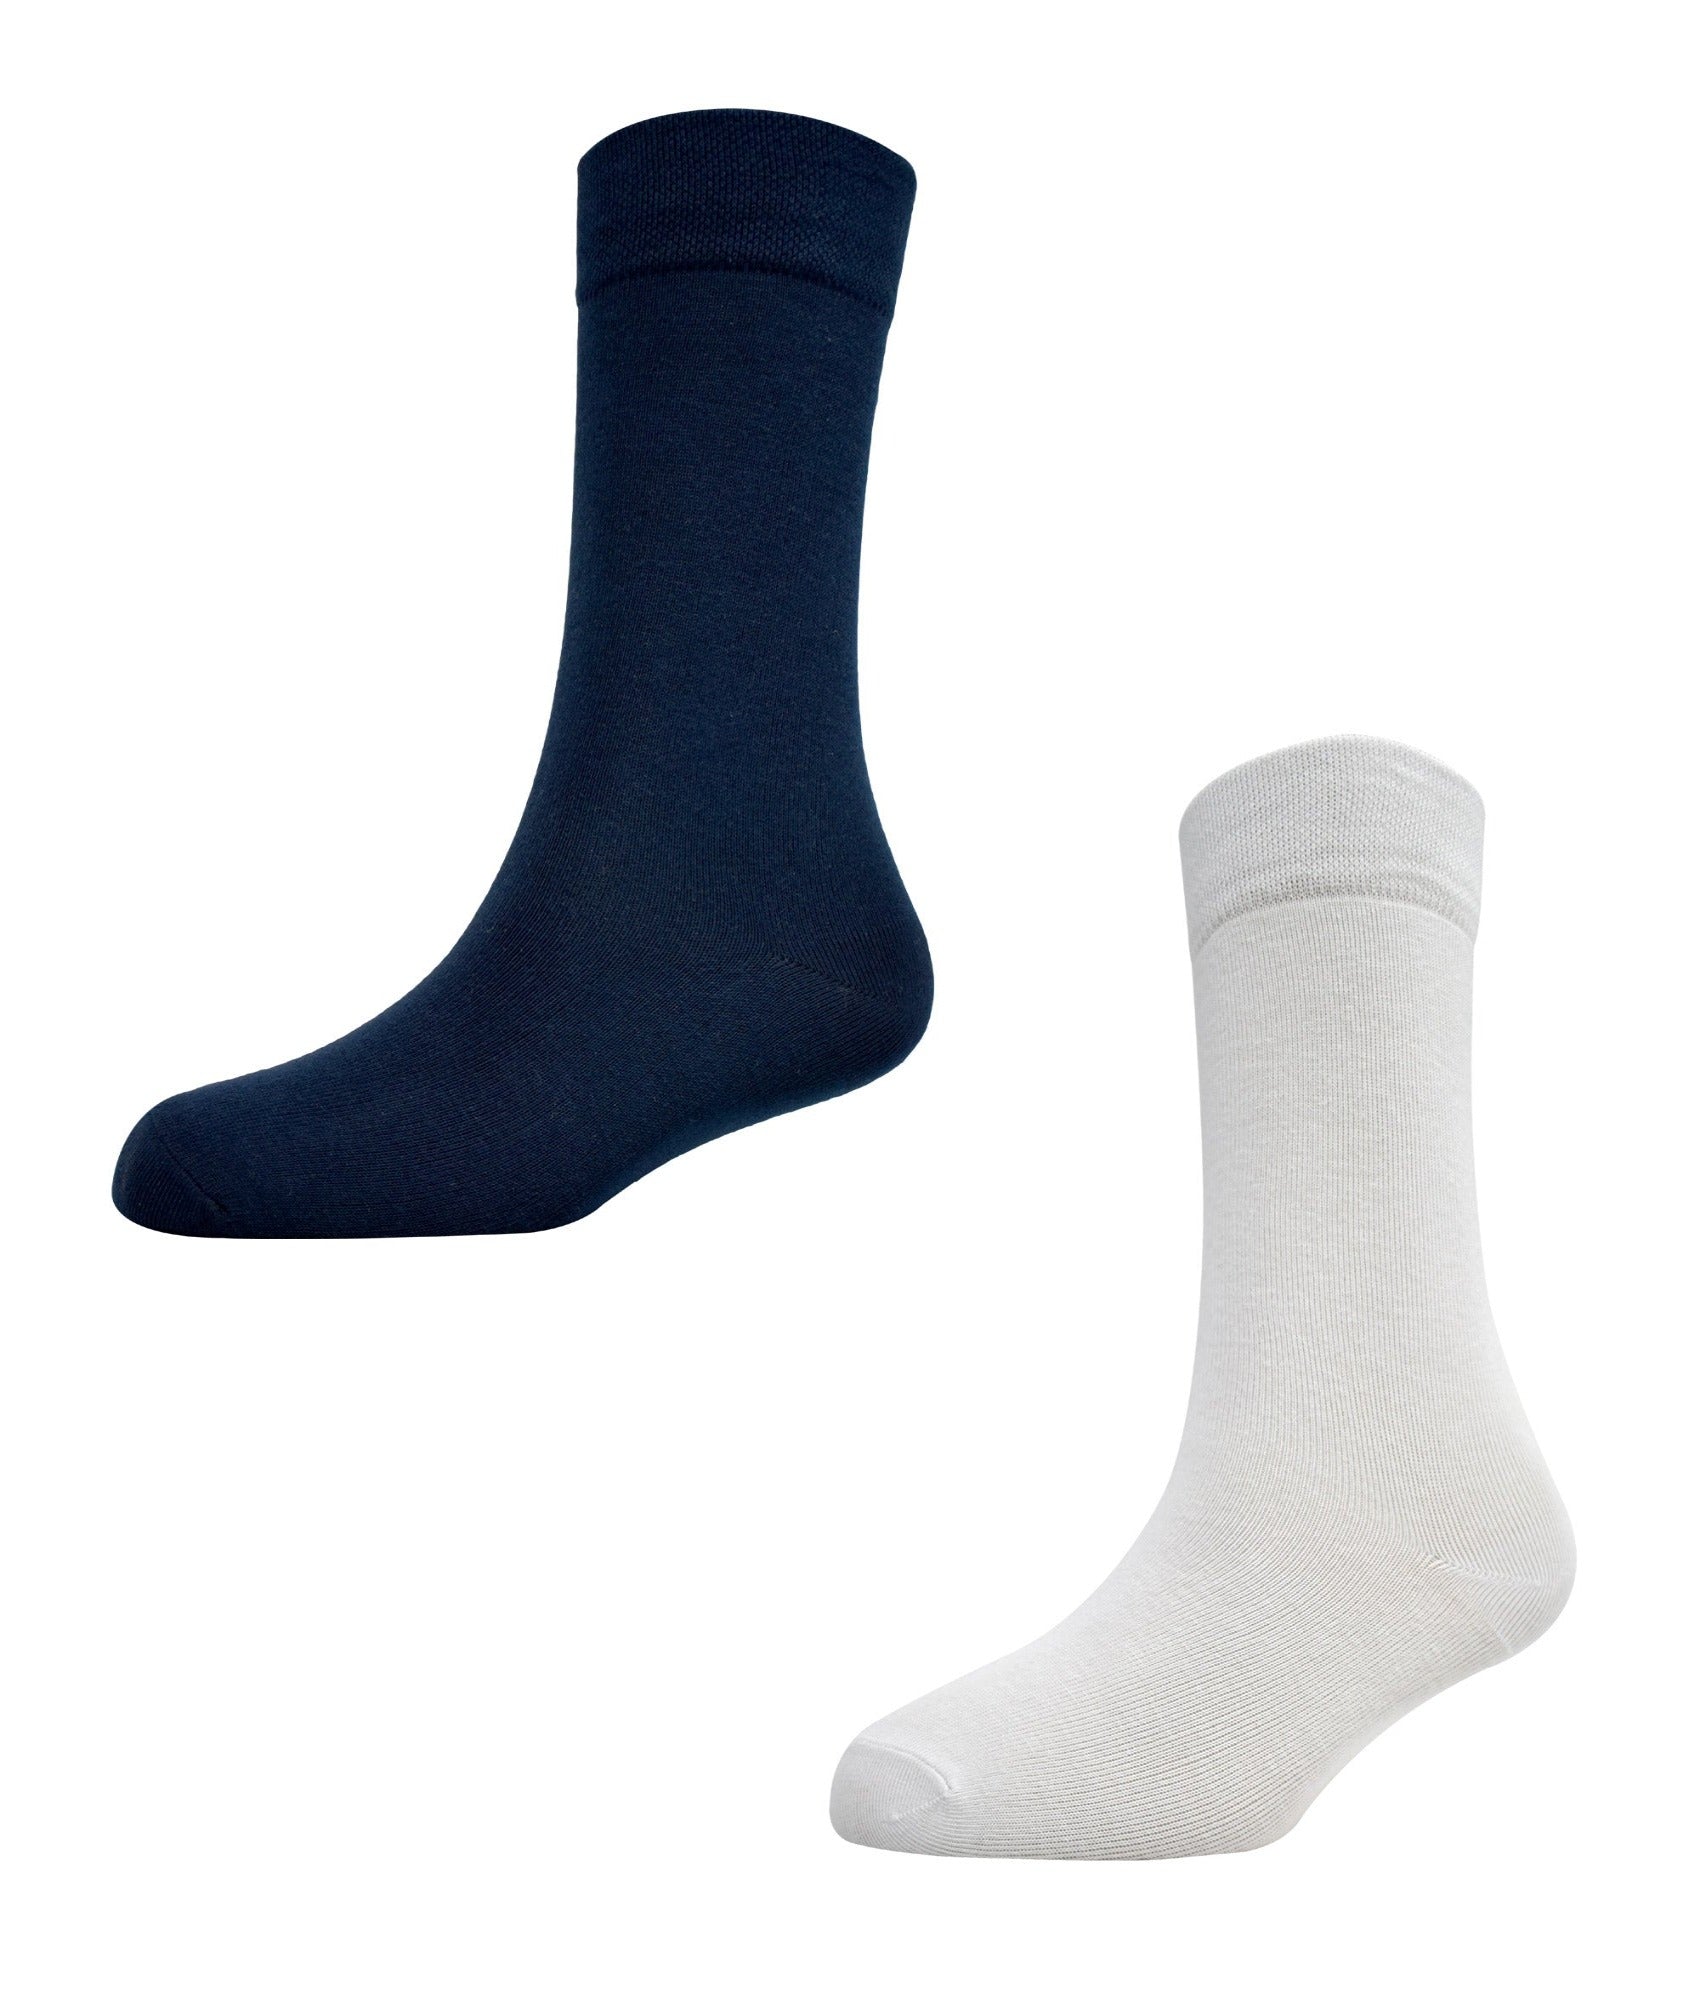 Kids Soft Cotton Navy & White School Socks - (Pack of 6 Pairs)